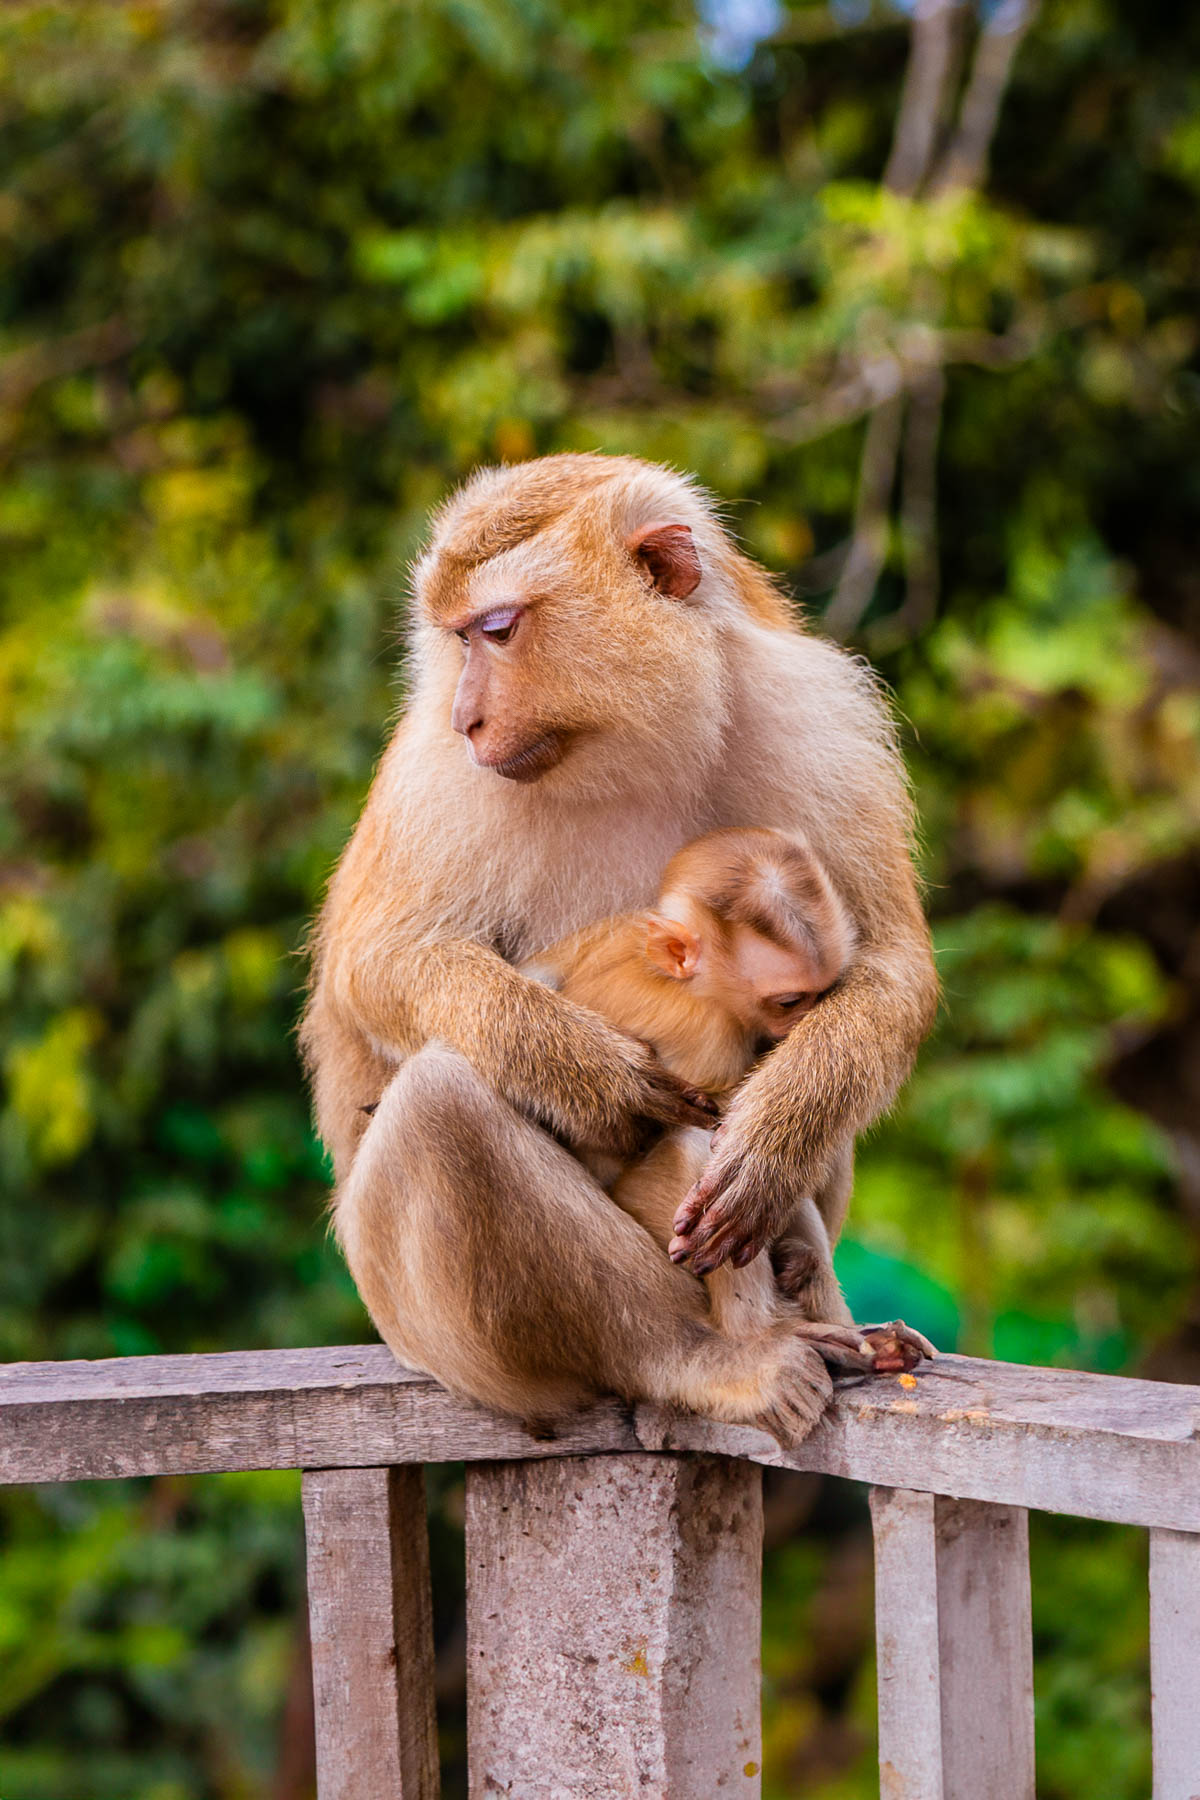 Monkeys at the Big Buddha in Phuket, Thailand